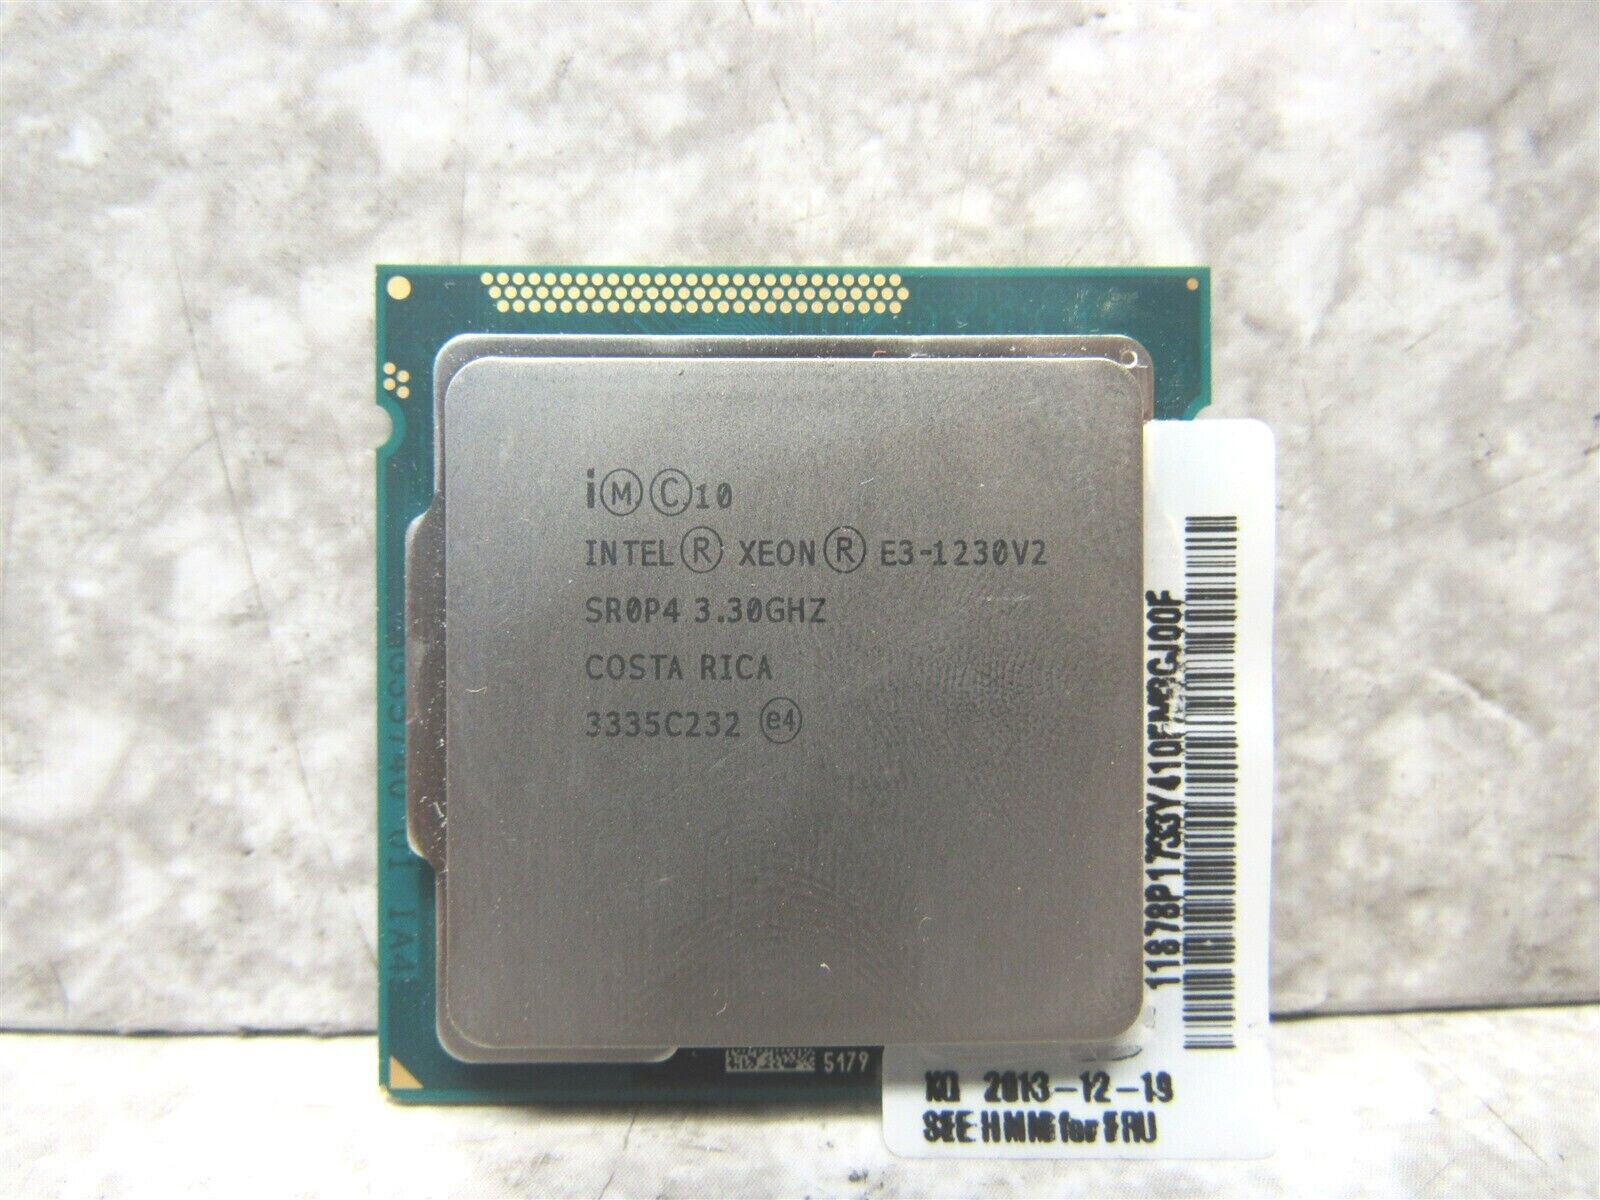 Intel Xeon E3-1230 V2 3.3GHz Quad Core Server CPU Processor SR0P4 LGA 1155